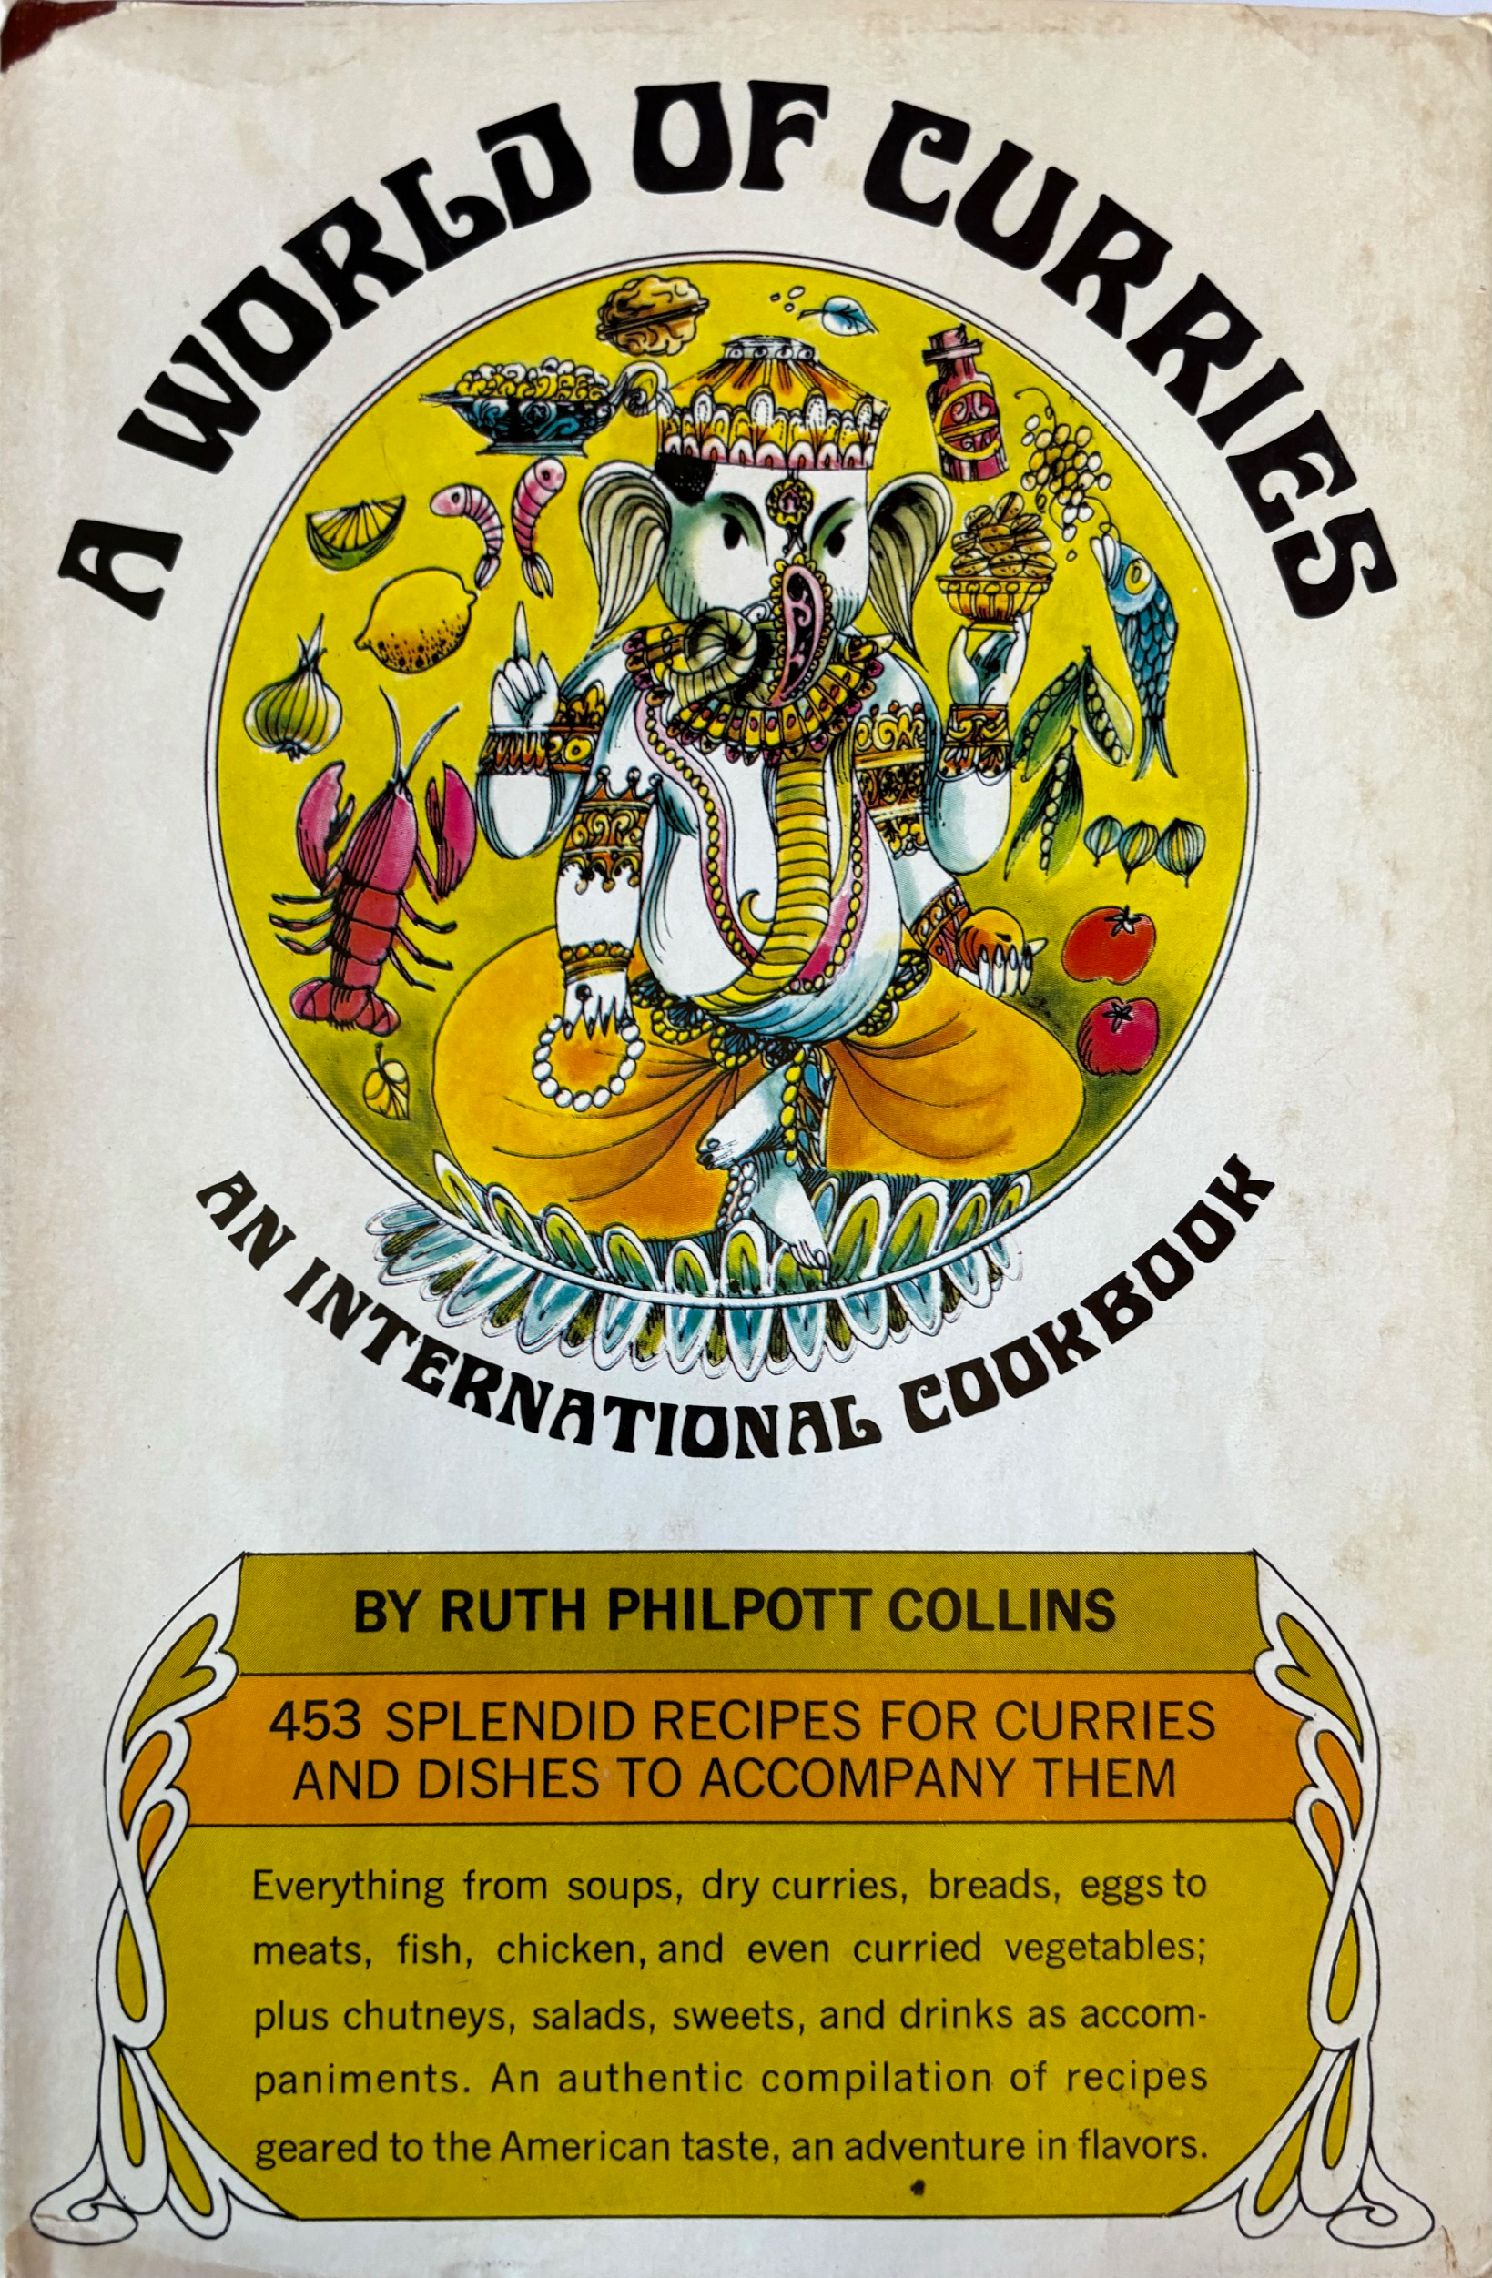 (*NEW ARRIVAL*) A World of Curries: An International Cookbook (Ruth Philpott Collins)